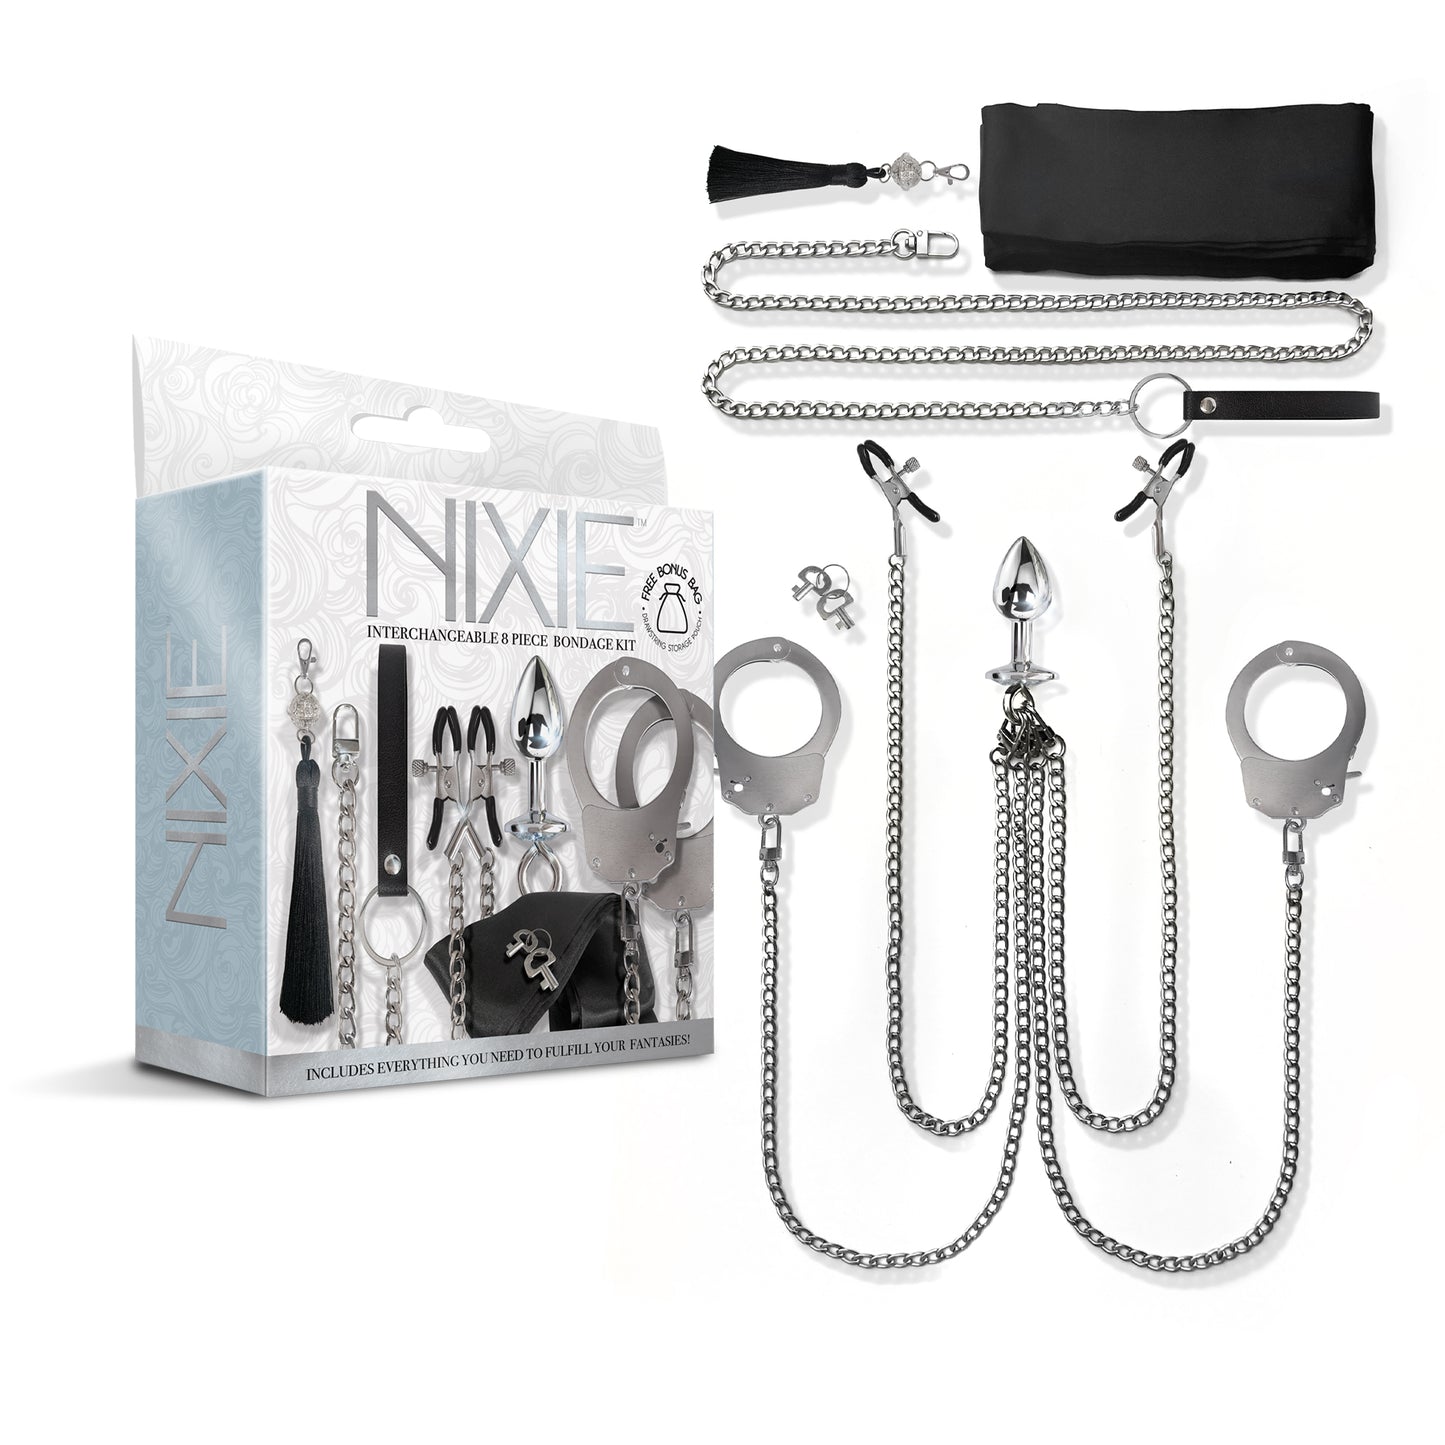 NIXIE Interchangeable 8 Piece Bondage Kit, Silver